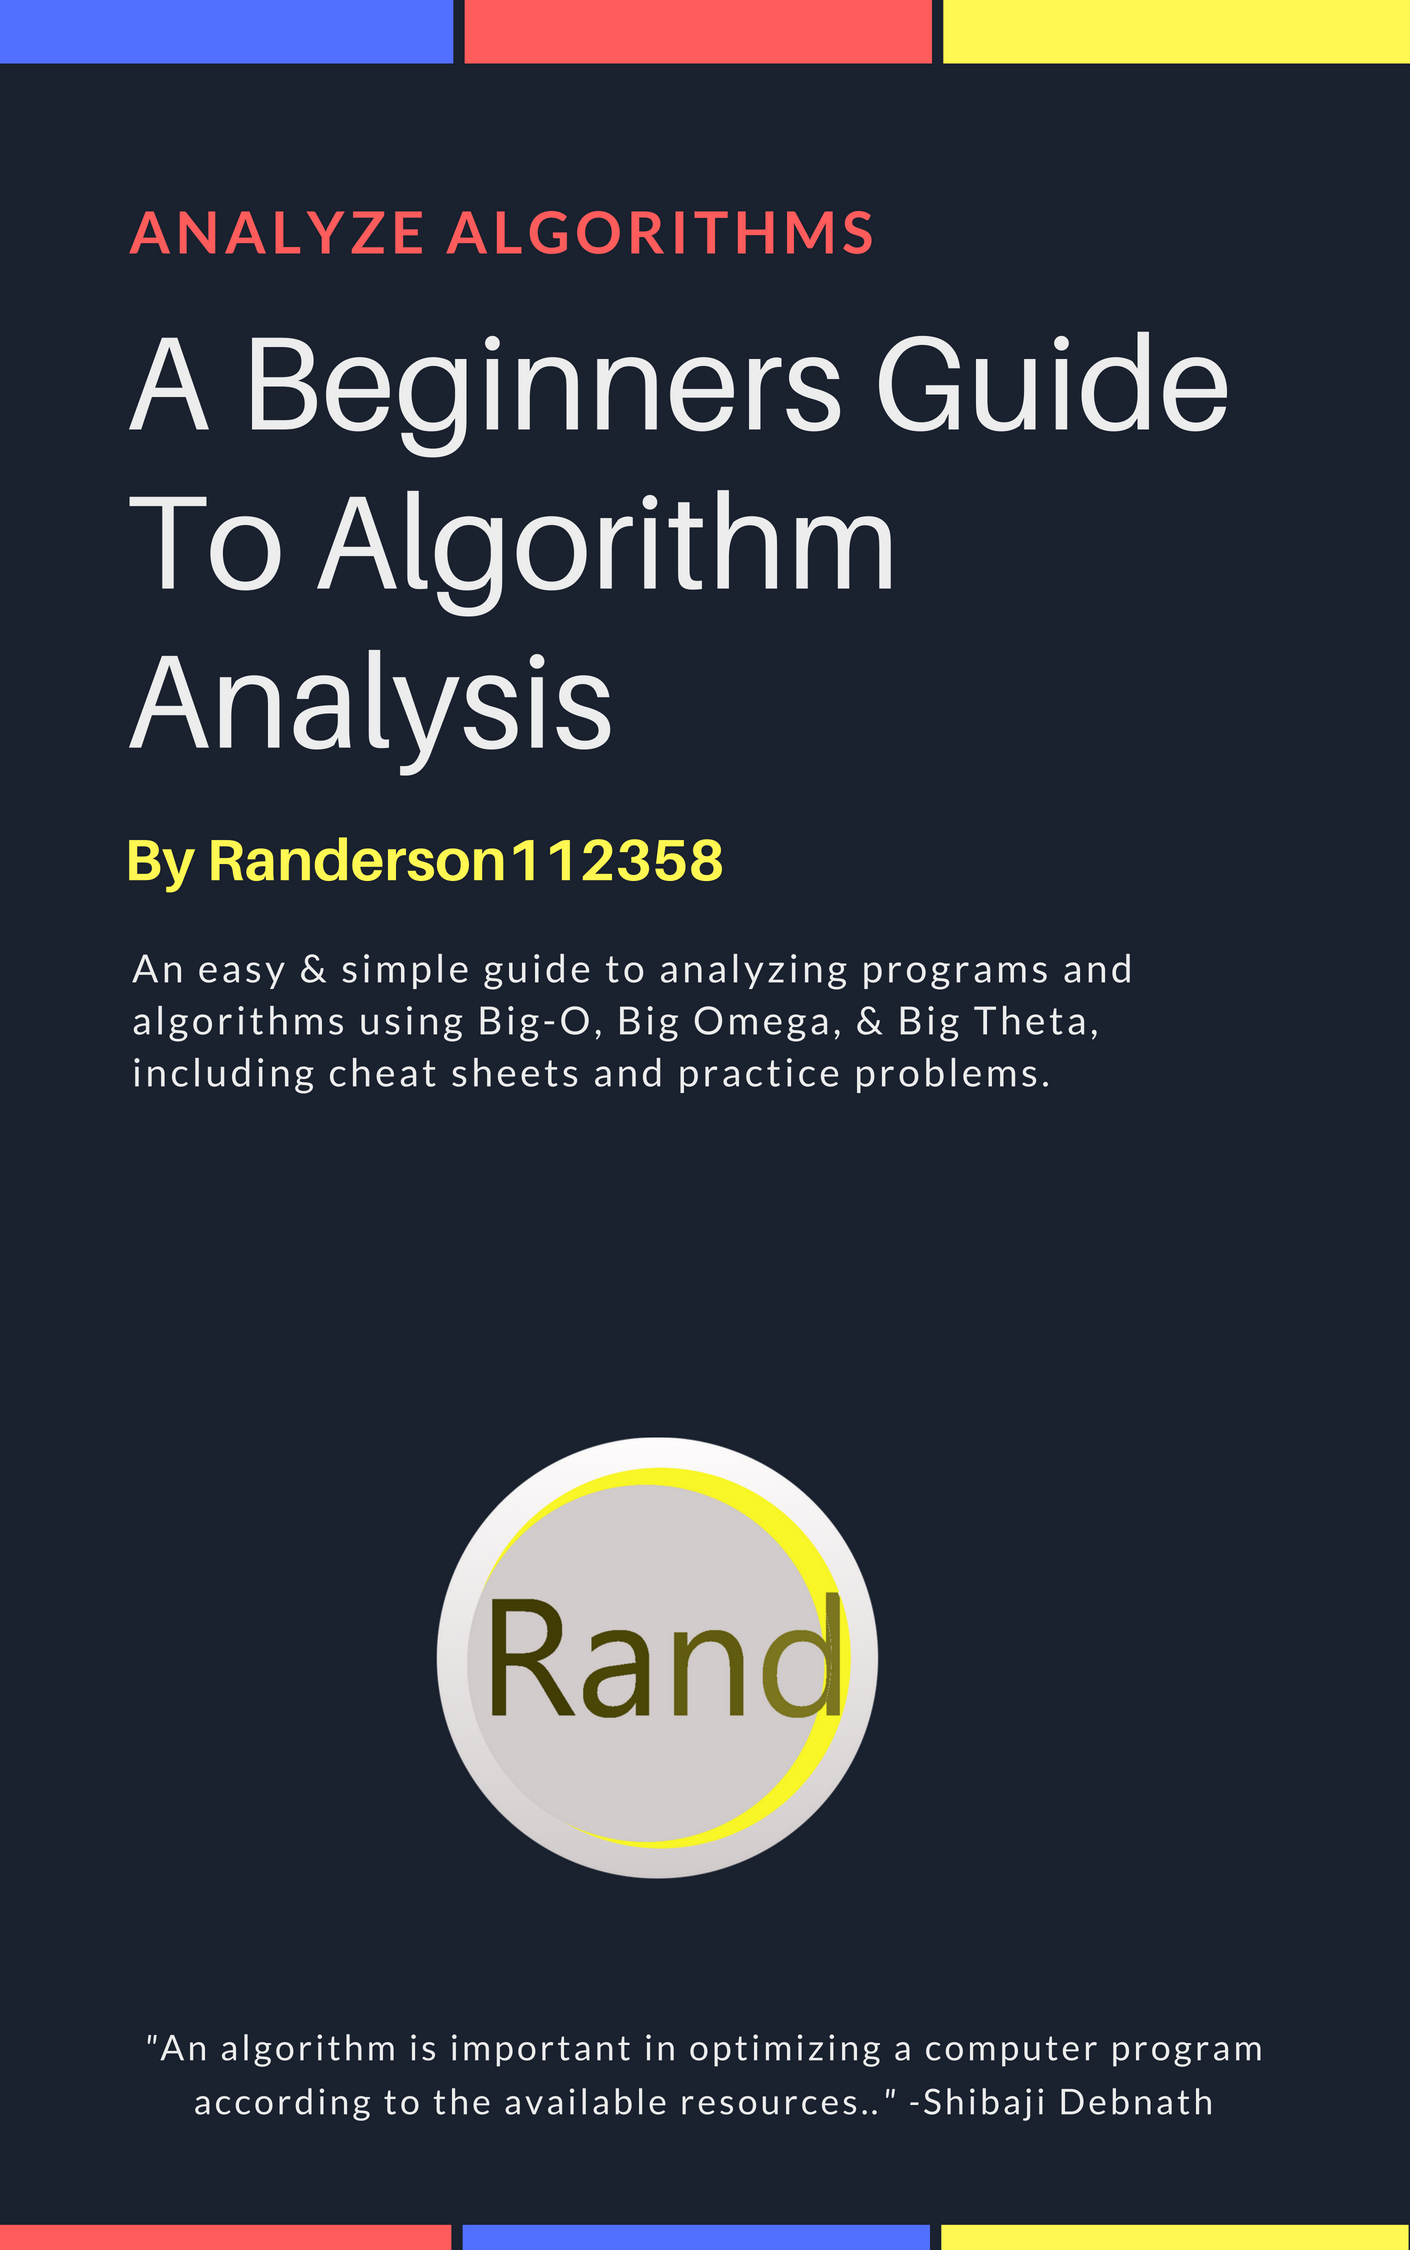 Algorithm Analysis Beginners Guide IMG